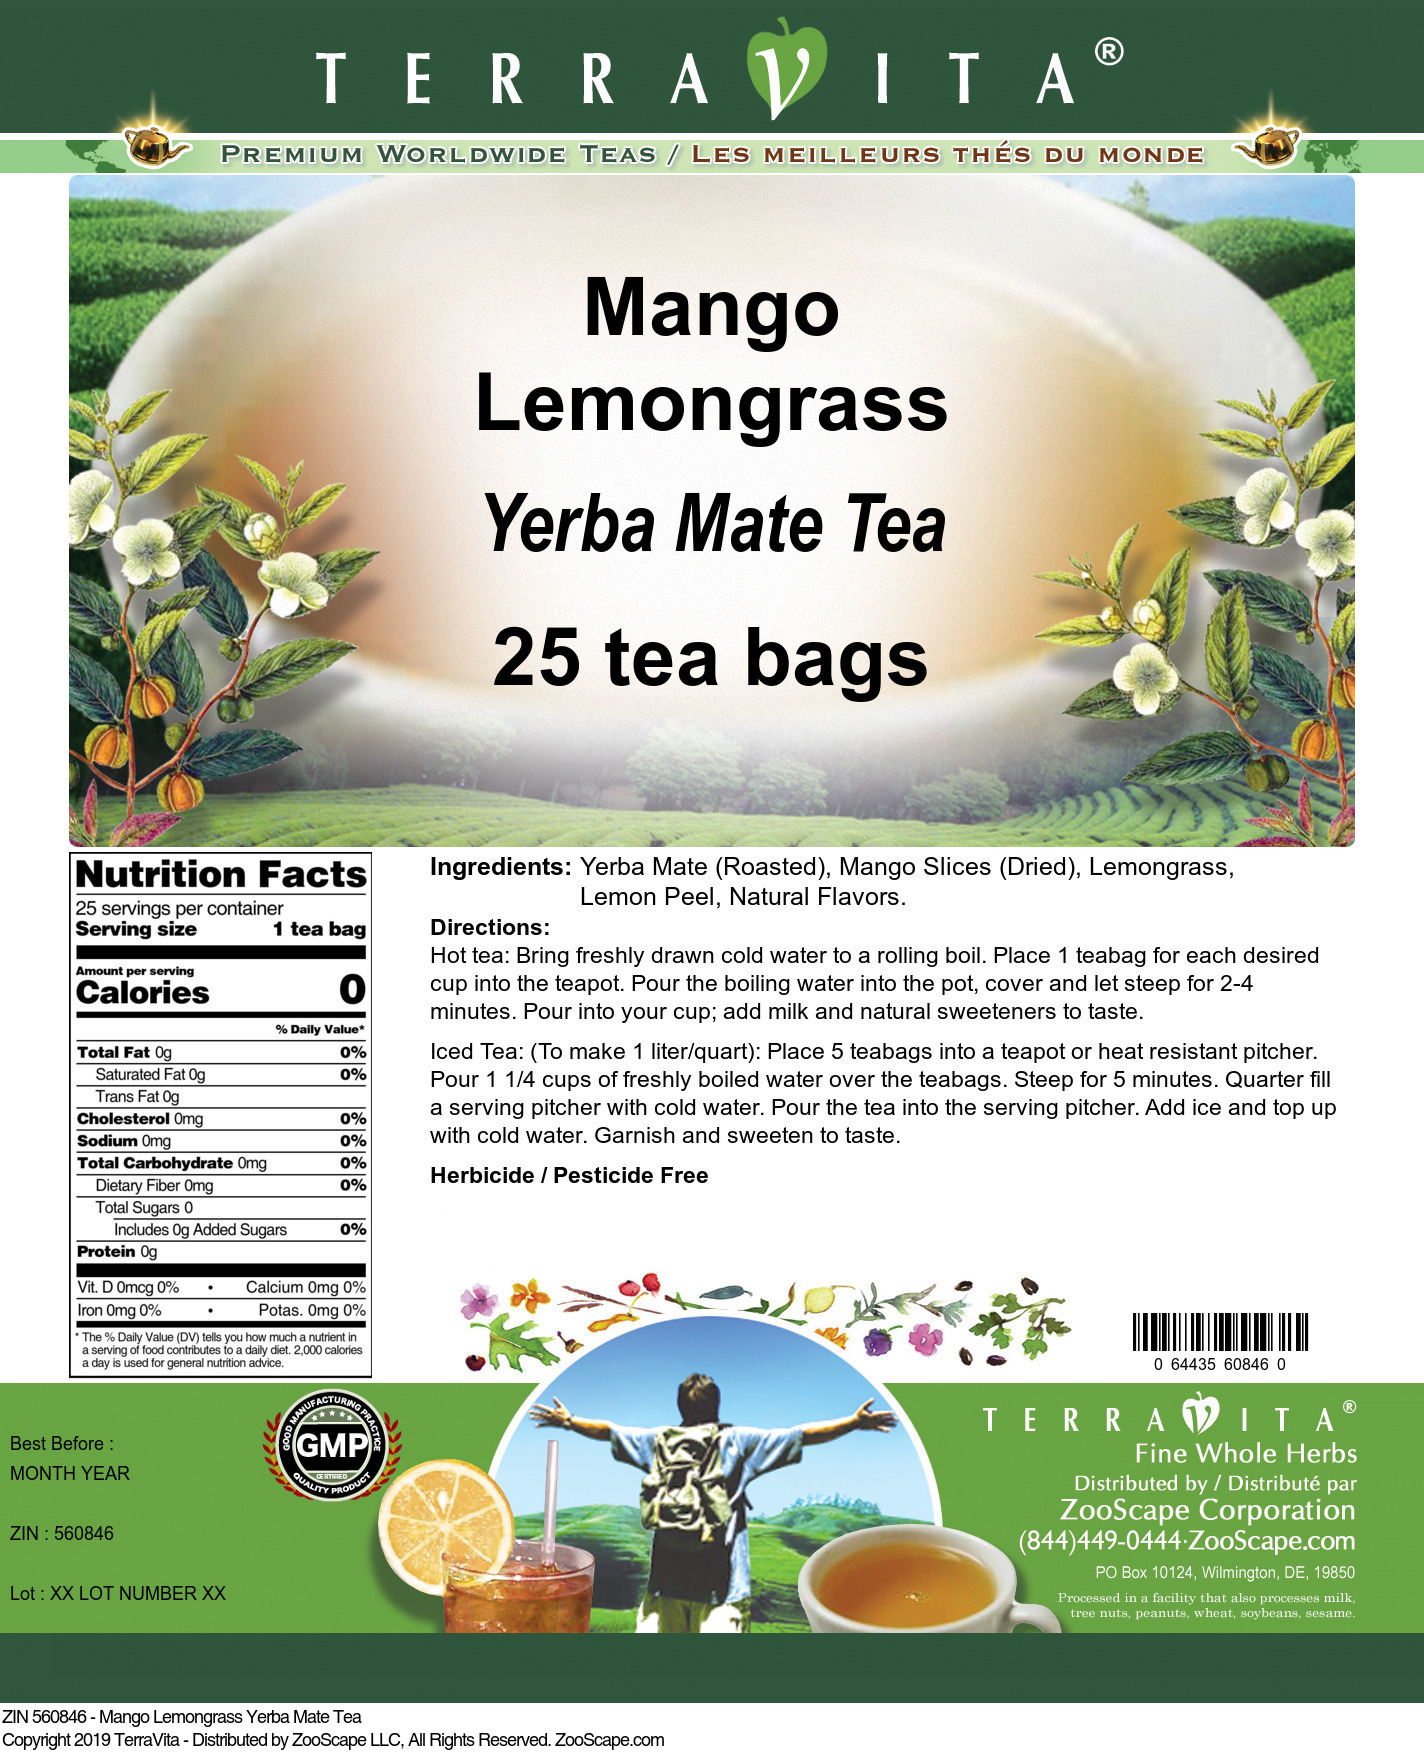 Mango Lemongrass Yerba Mate Tea - Label